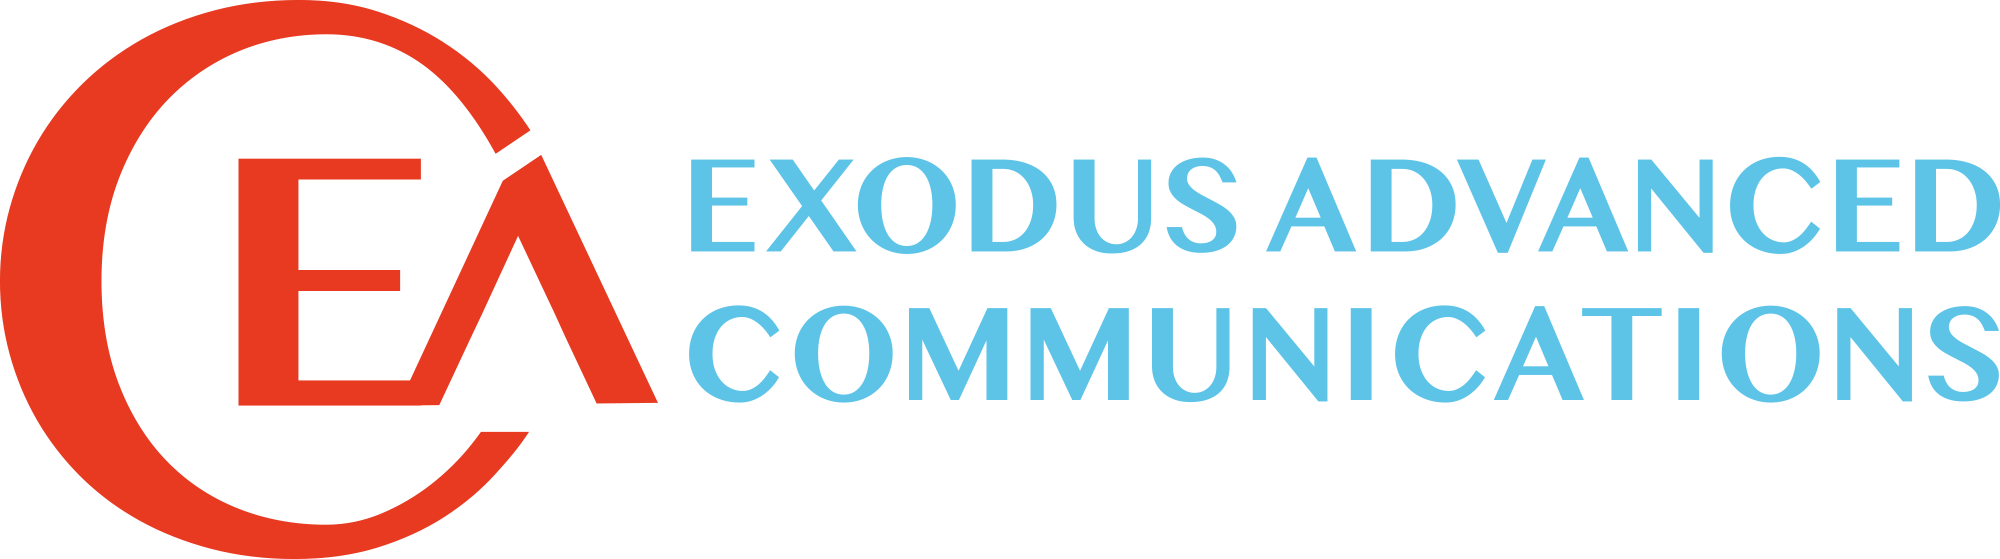 Exodus Advanced Communications logo